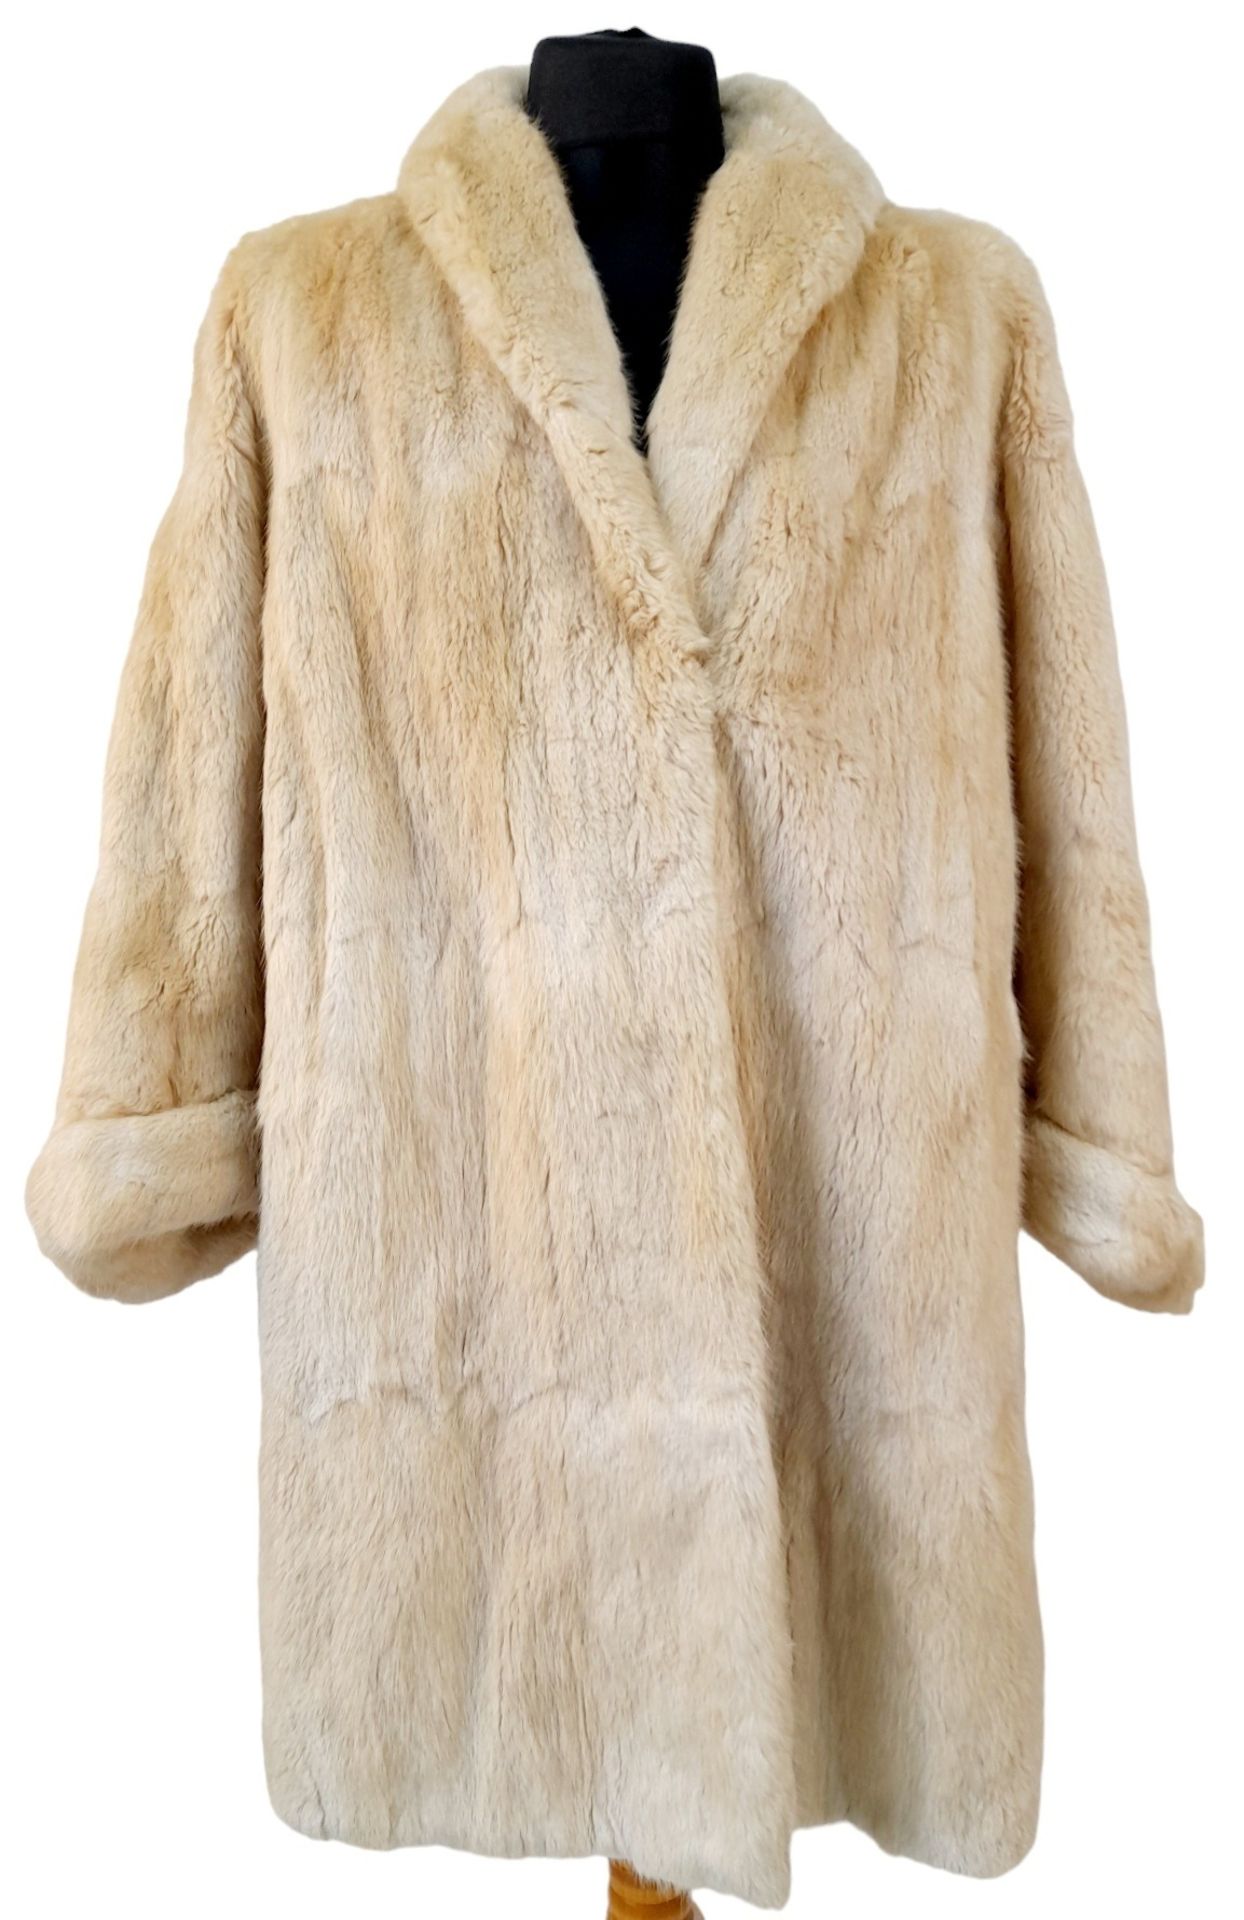 A Barkers of Kensington Three-Quarter Length White Fur Coat.